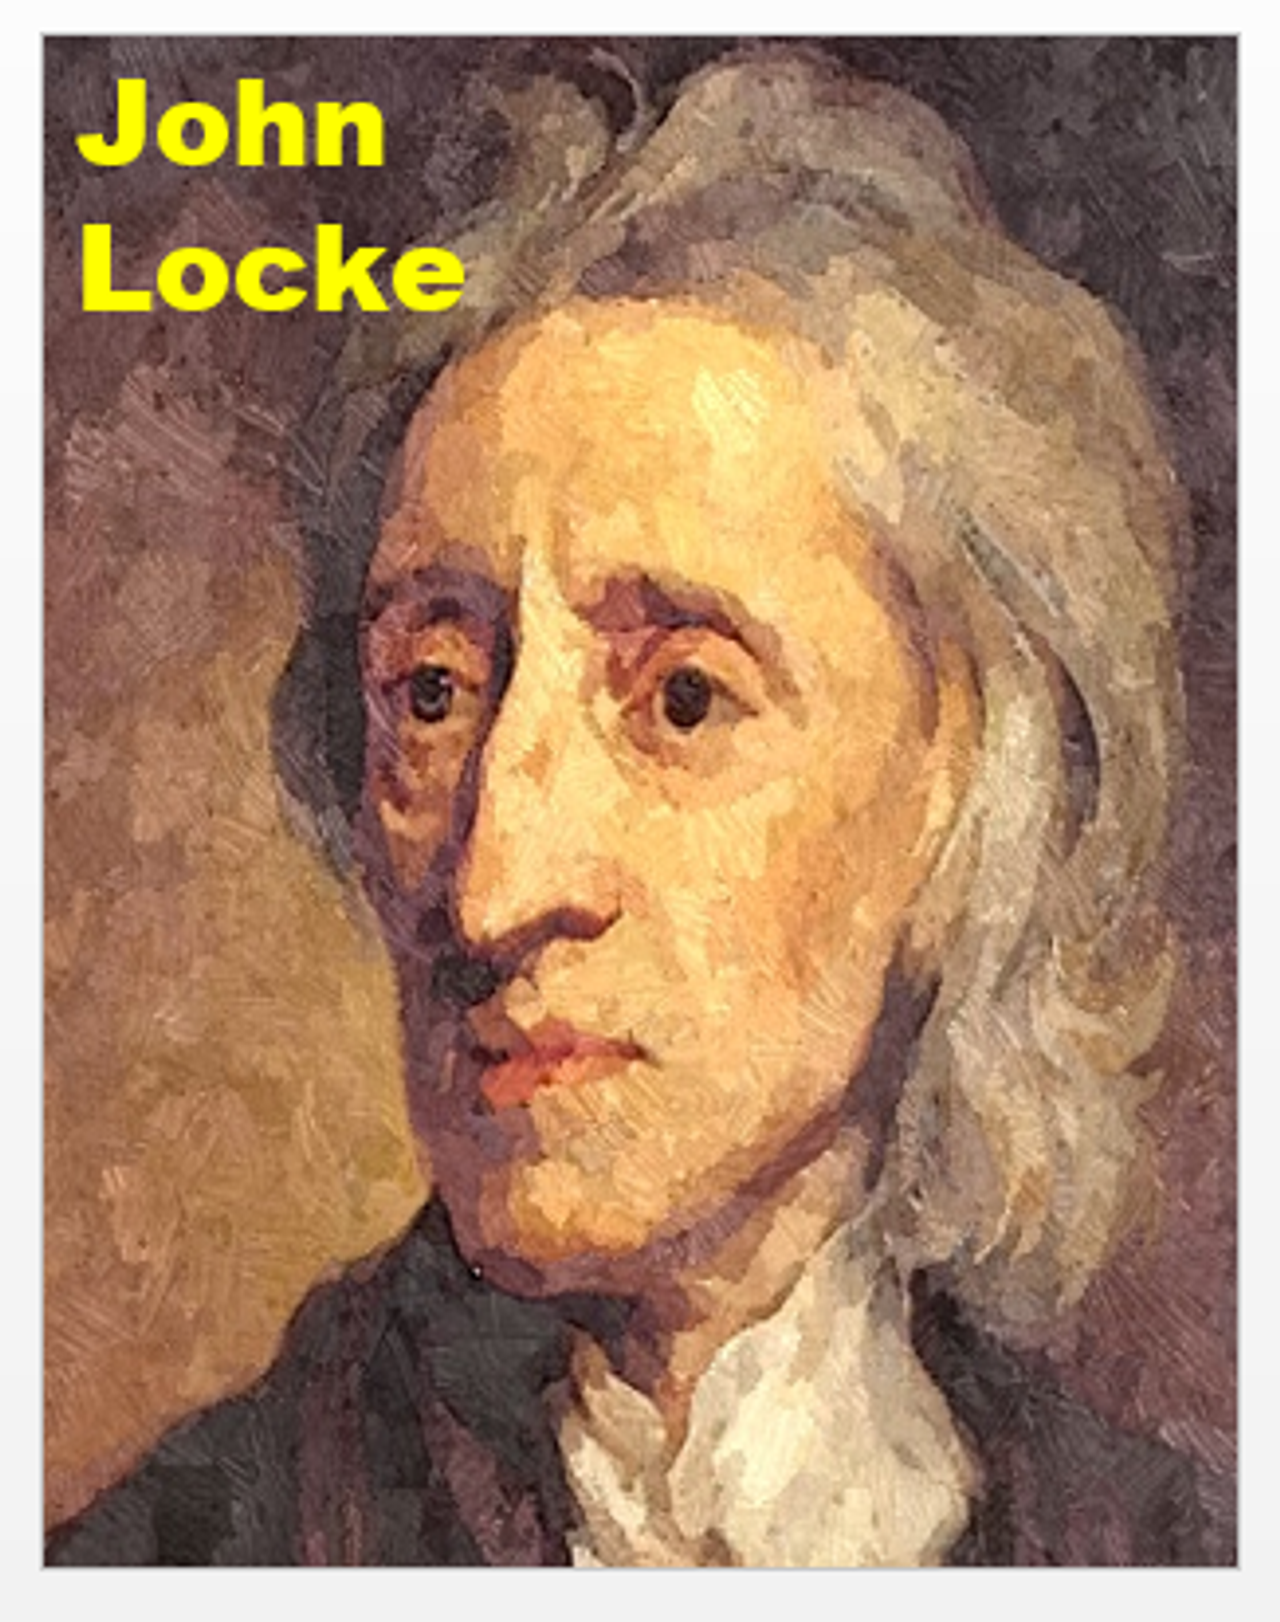 John Locke + Assessments - Amped Up Learning